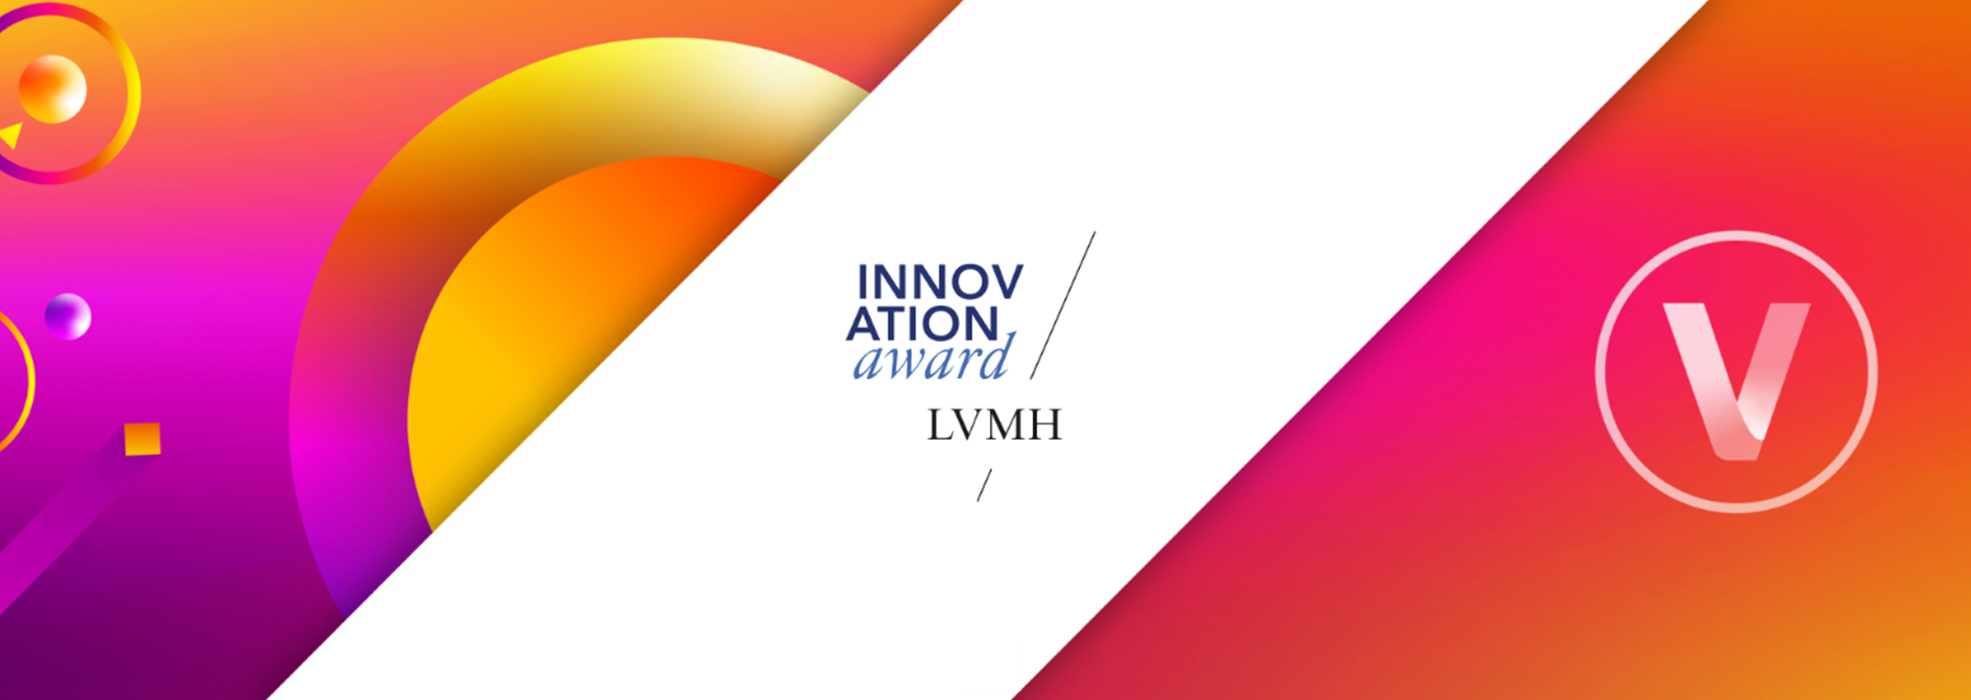 LVMH Innovation Awards Bannière